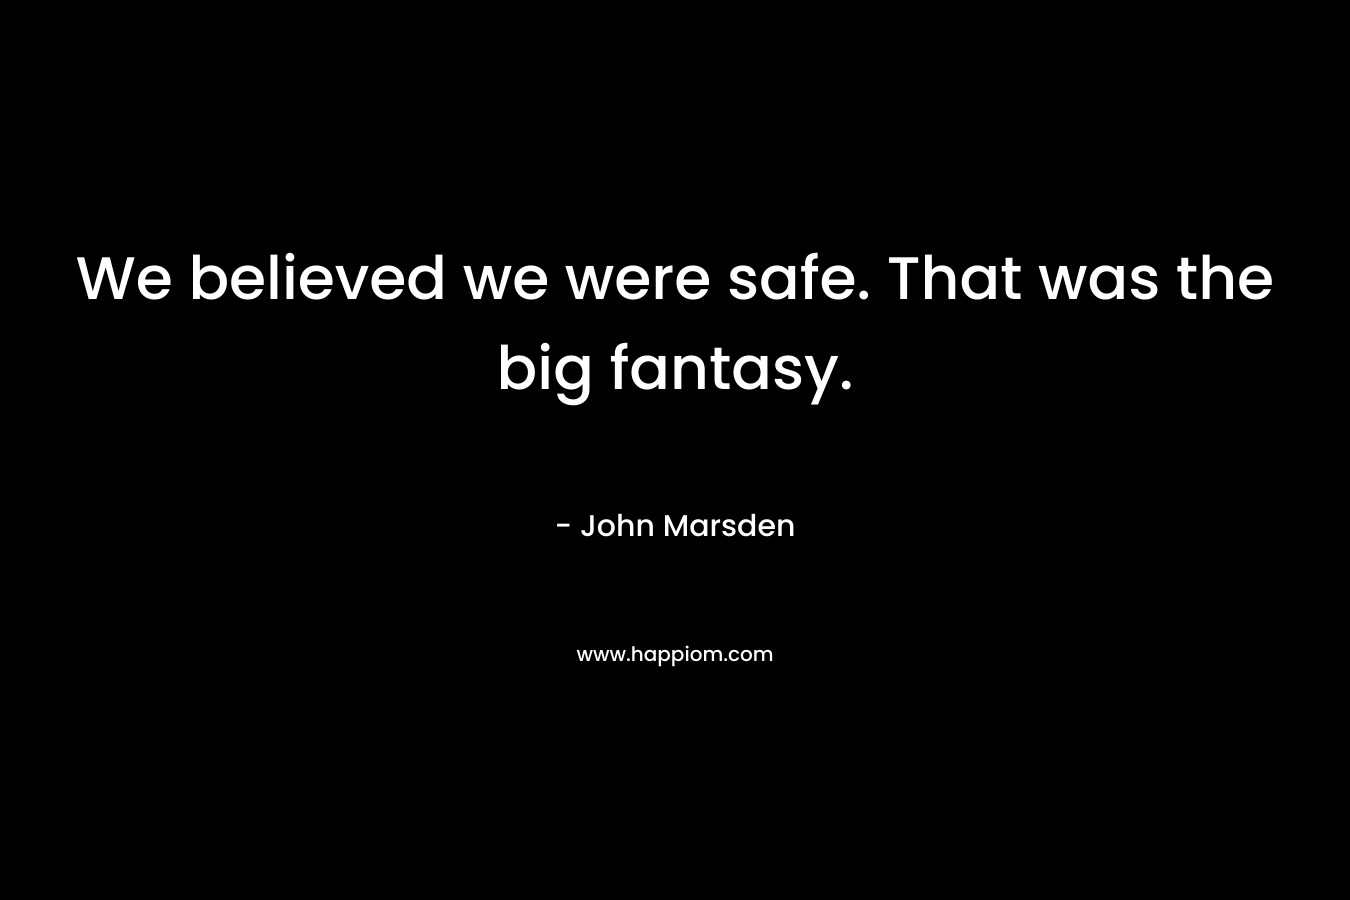 We believed we were safe. That was the big fantasy.